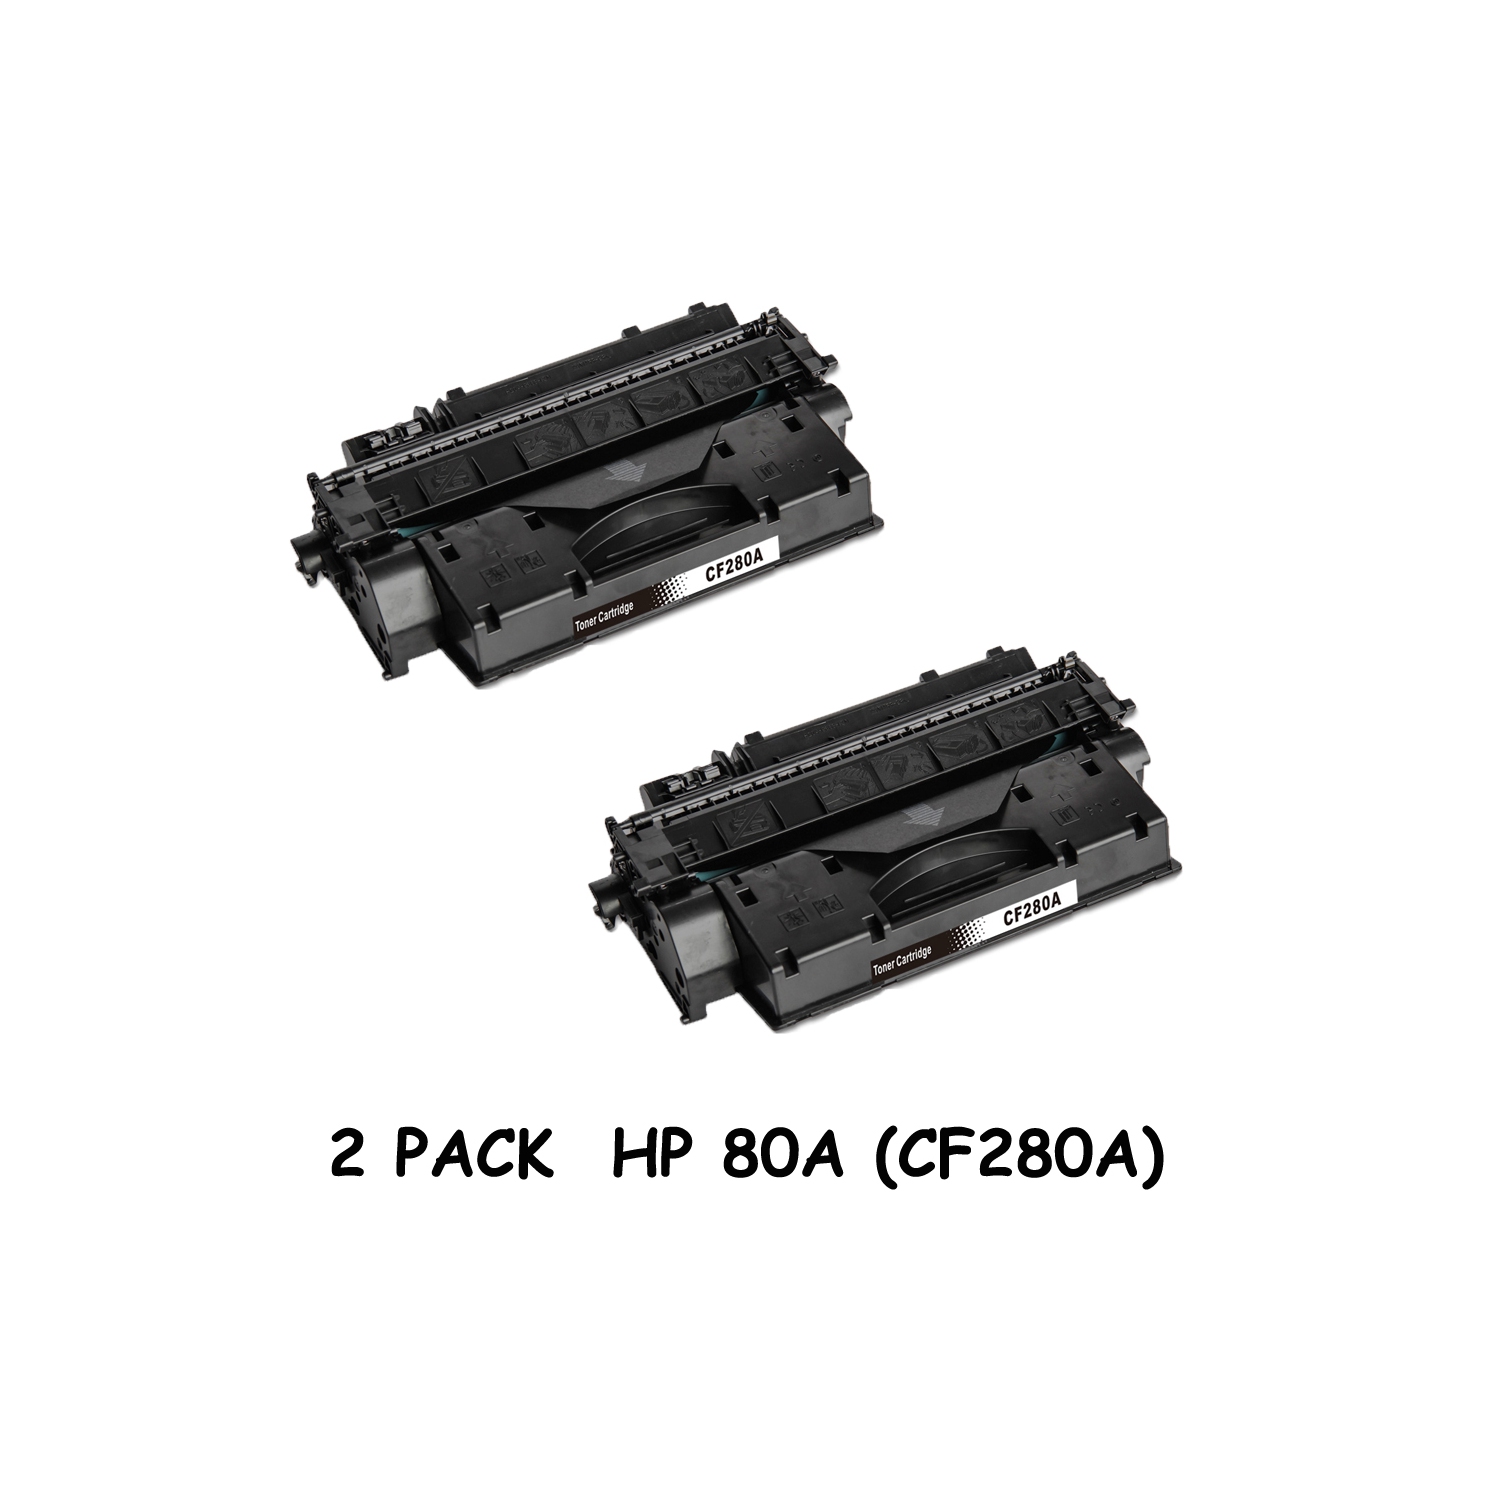 Bestoner™ 2 PK HP 80A (CF280A)/hp80a/80a/HP80A/80A/CF280A/cf280a/cf280/280/80A/80 HP LaserJet Pro M401 M425d